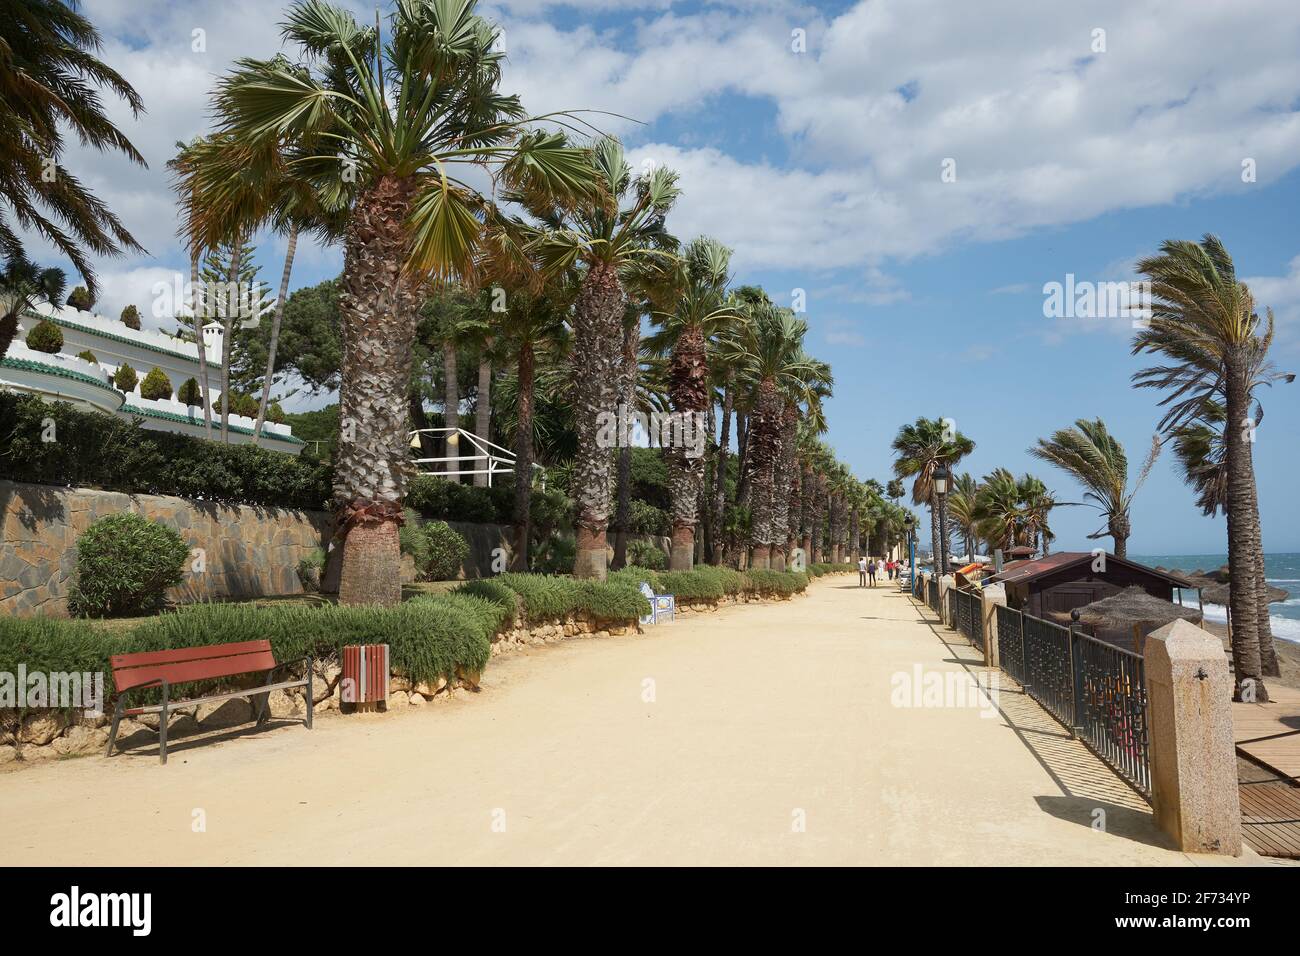 Paseo maritimo, promenade in Marbella, Malaga province, Andalusia, Spain. Stock Photo